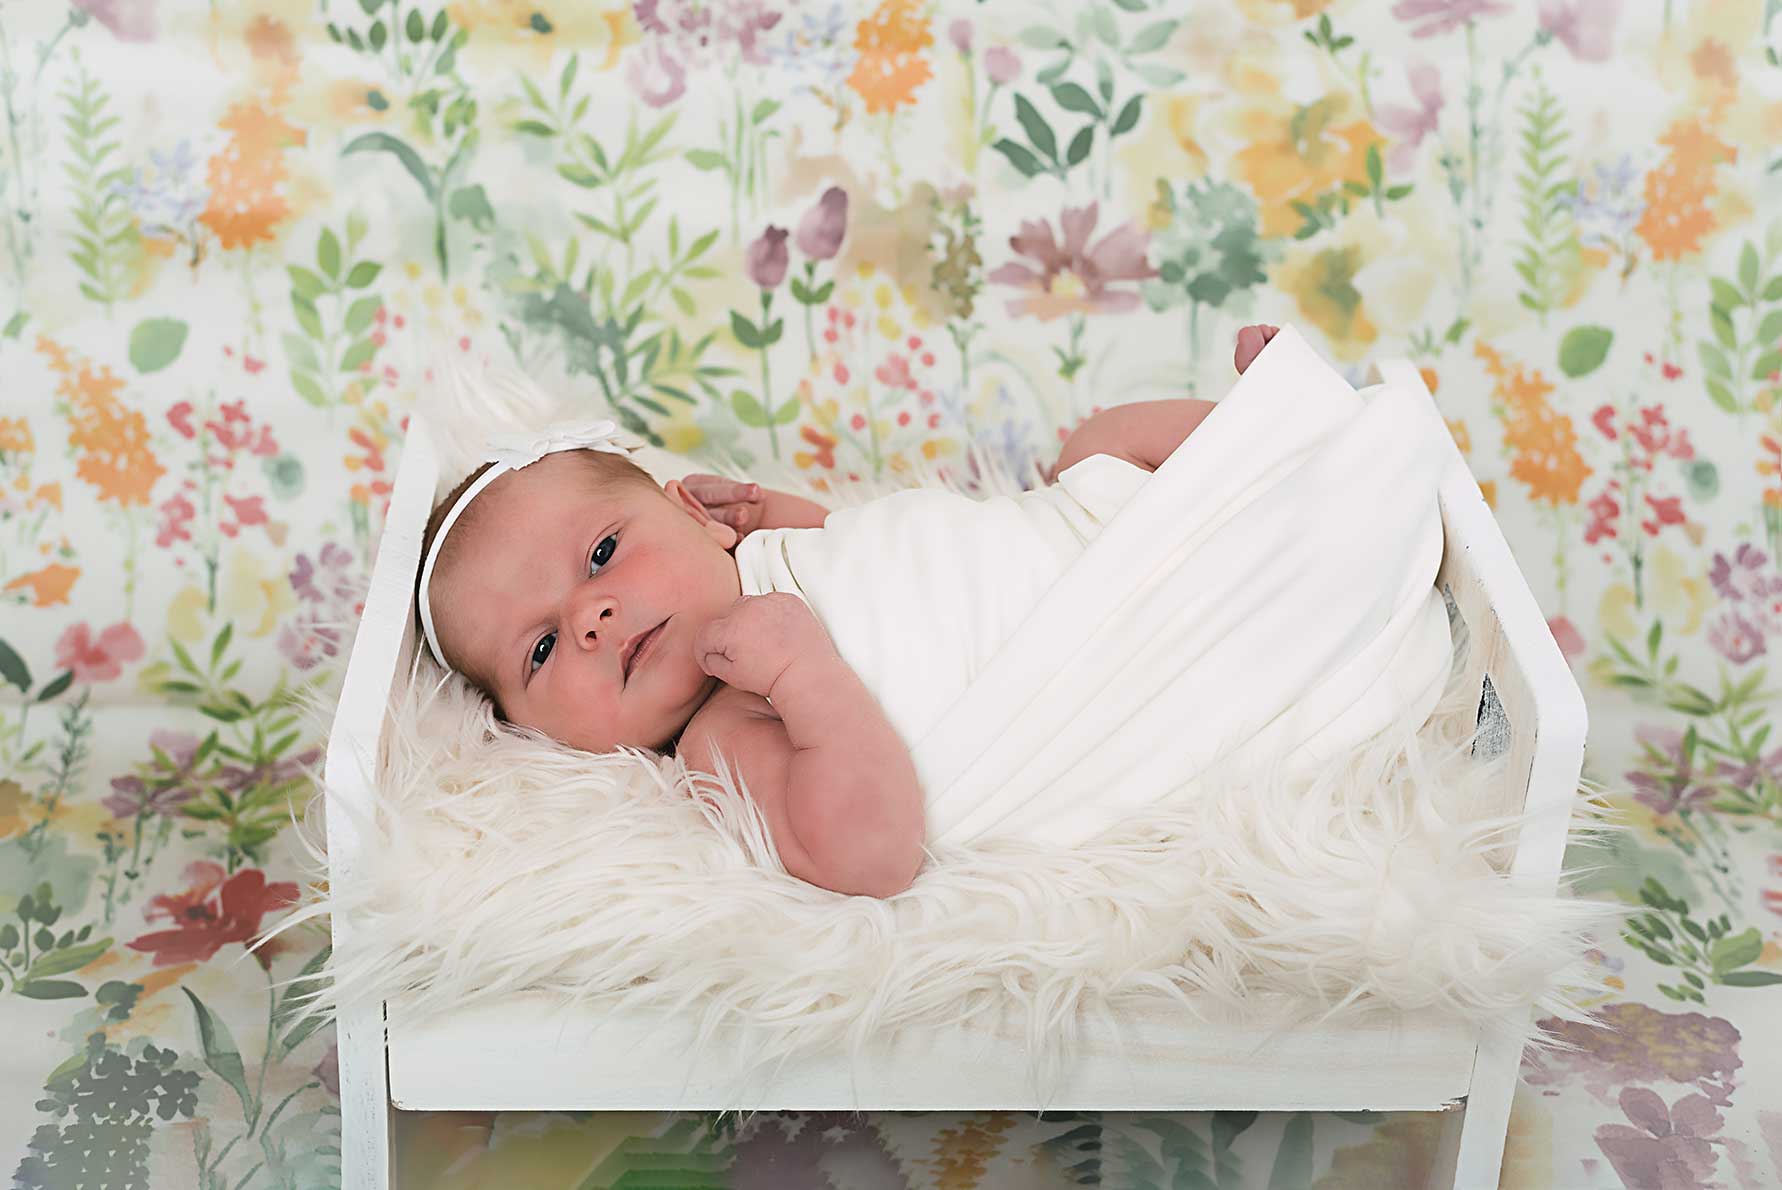 Newborn baby with wooden backdrop, studio shooting.